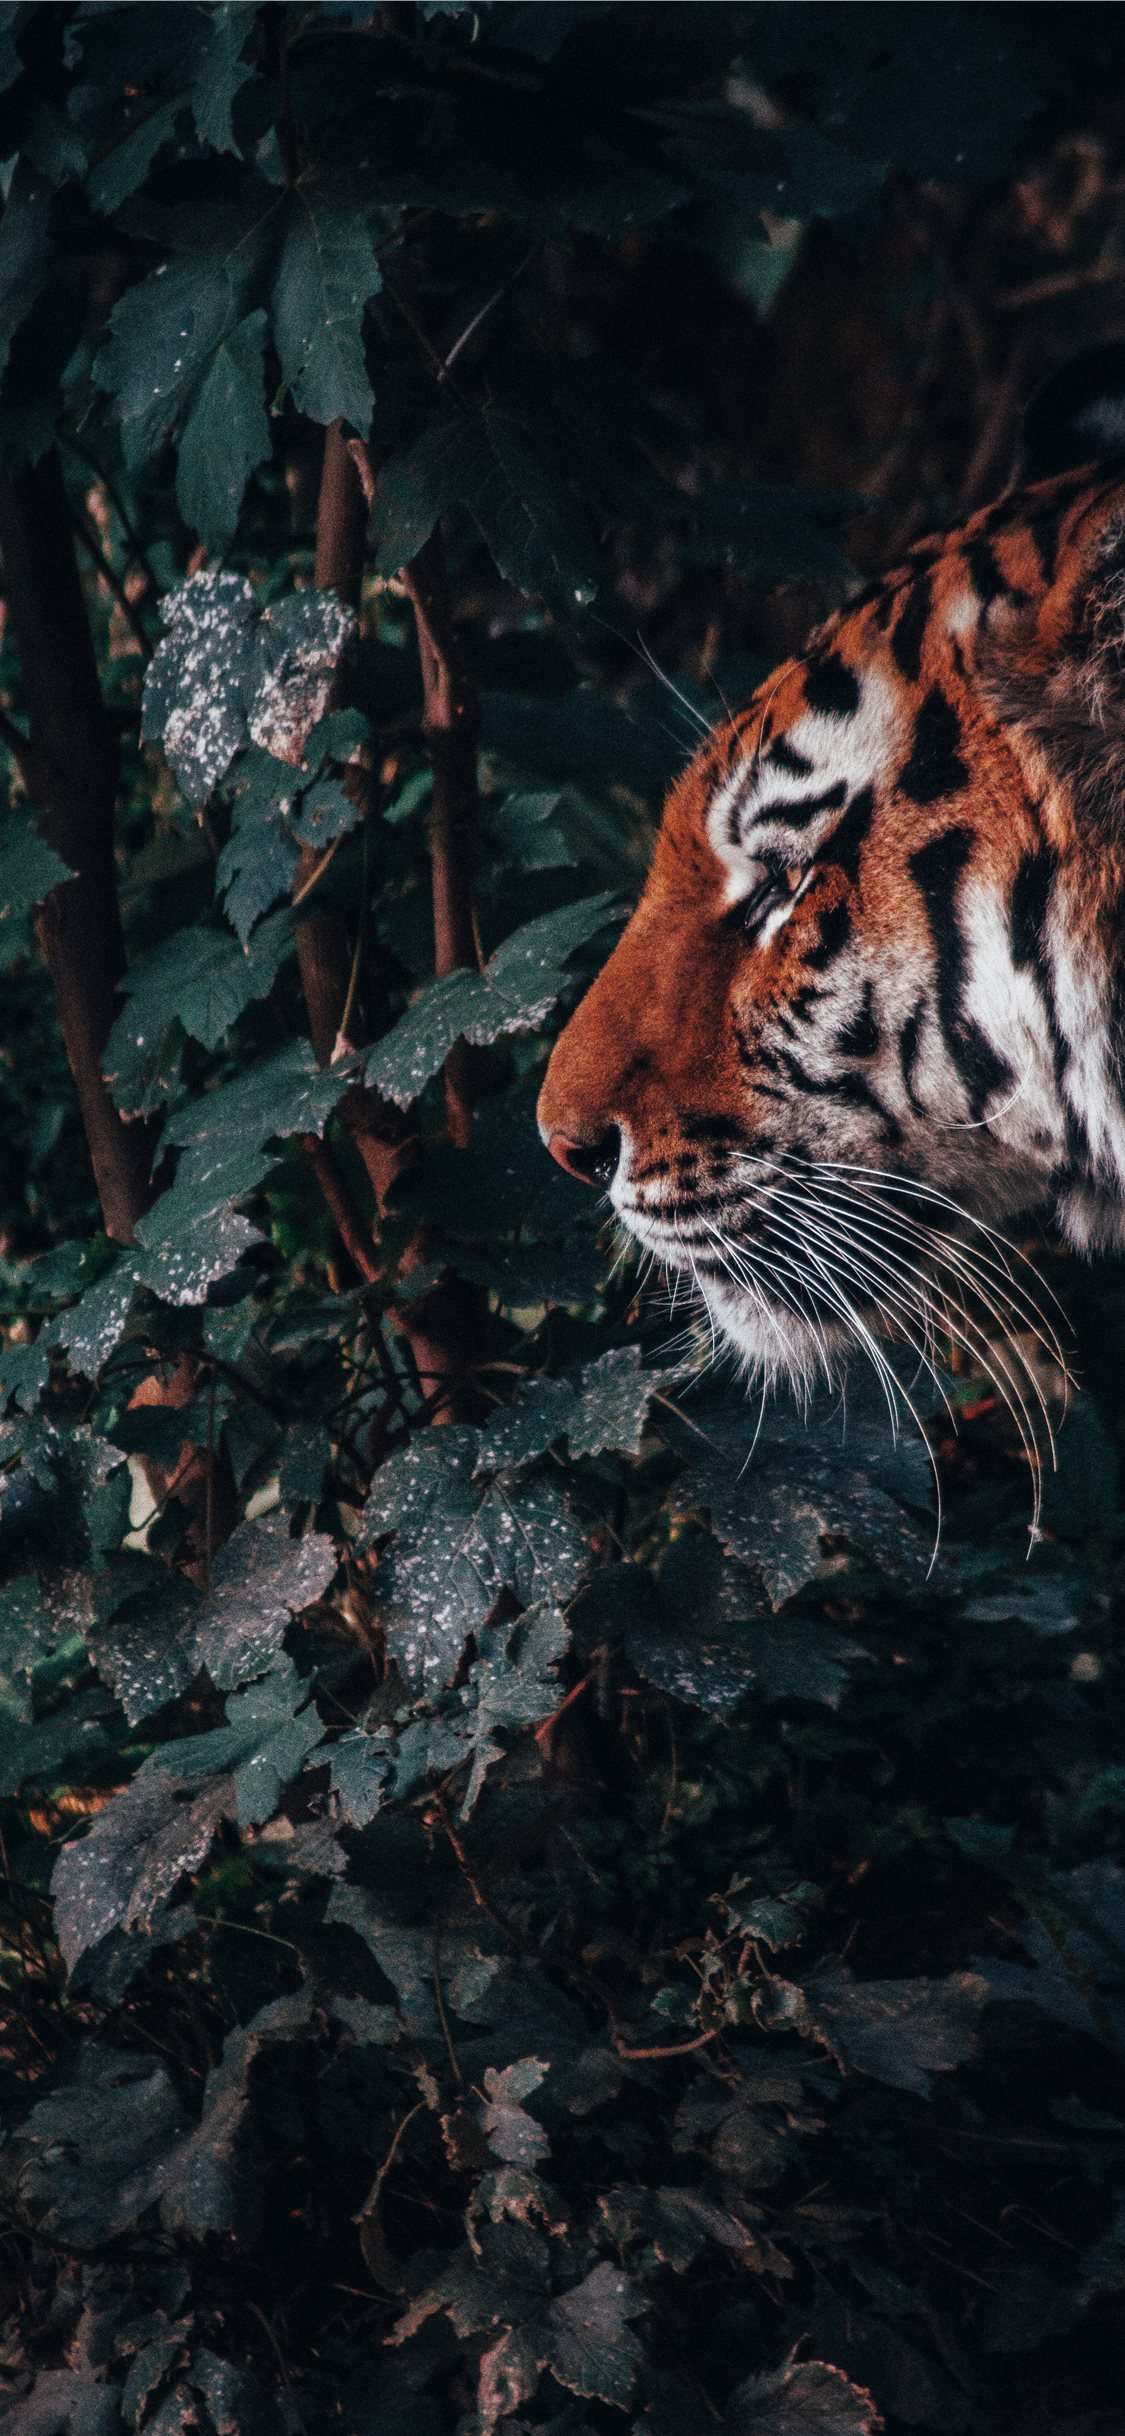 animal wallpaper hd,tigre de bengala,felidae,fauna silvestre,animal terrestre,tigre